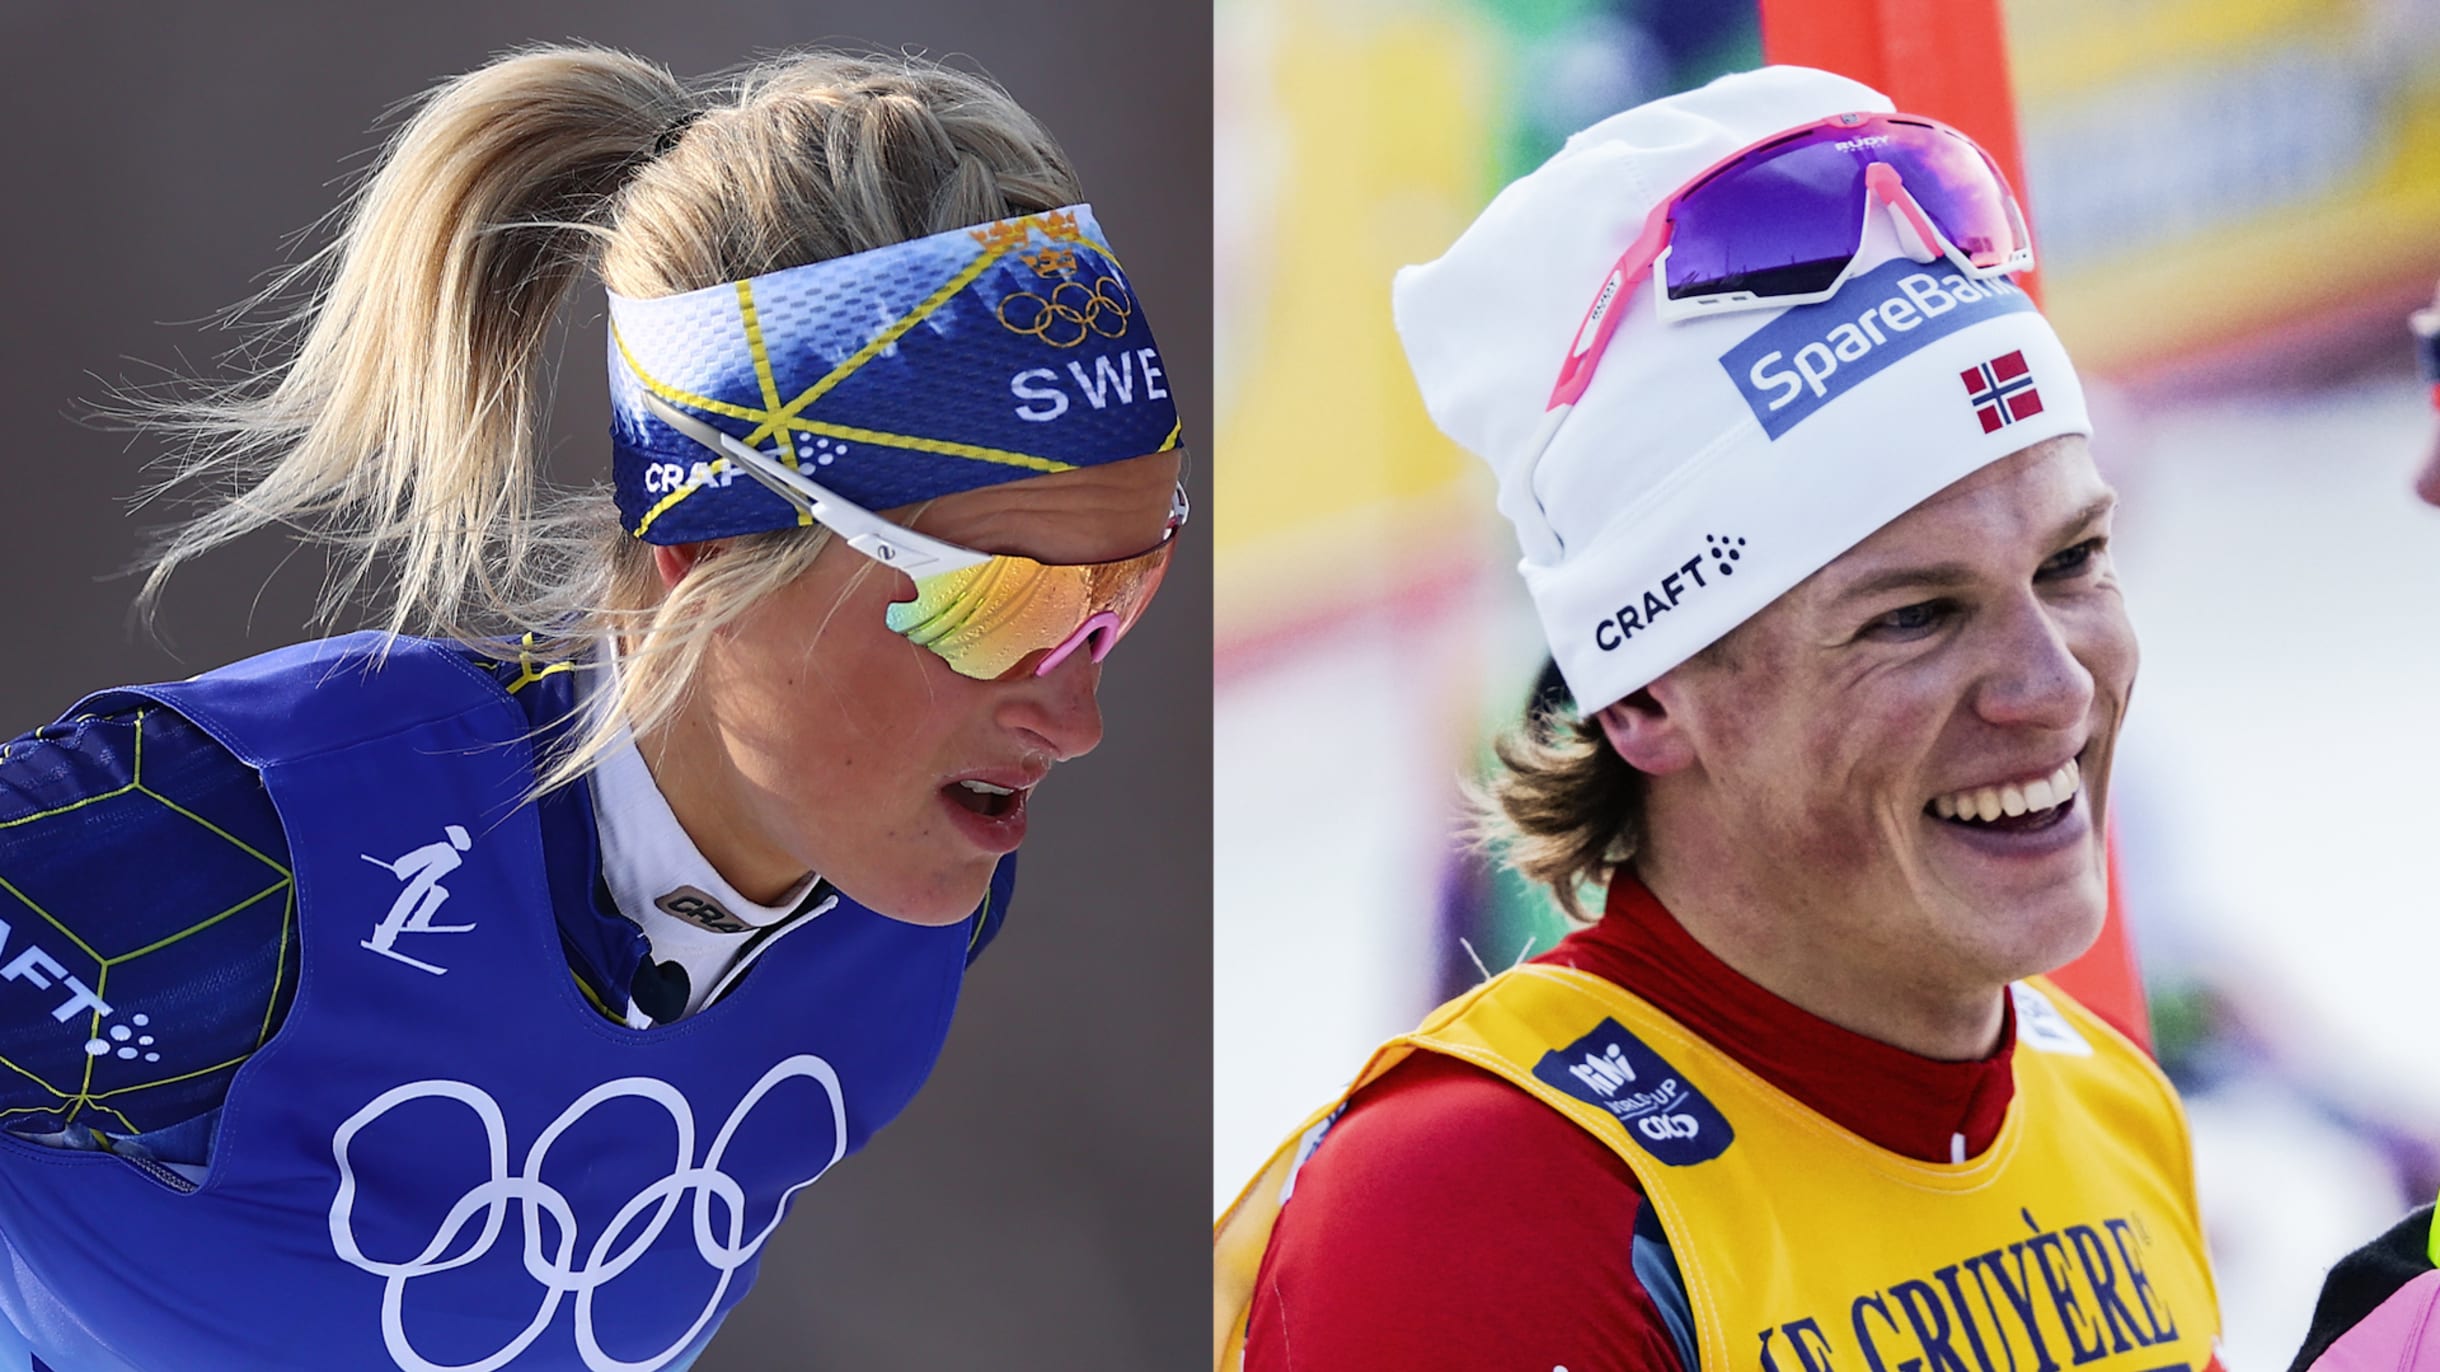 Tour de Ski 2022-23 results Johannes Klaebo and Frida Karlsson claim overall titles